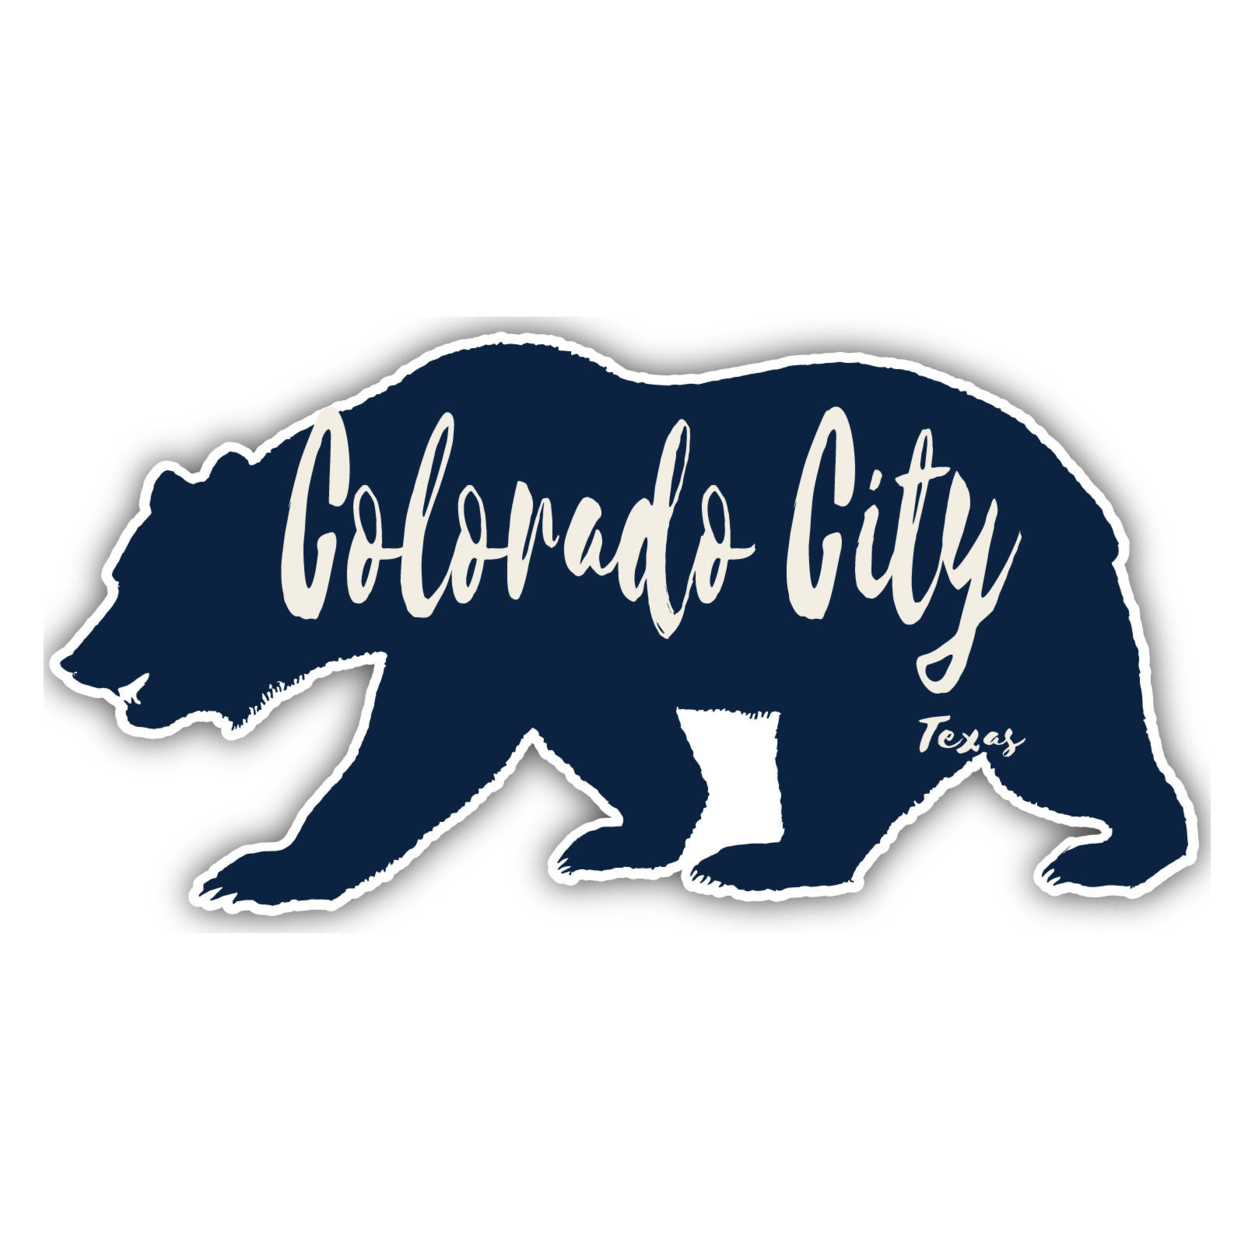 Colorado City Texas Souvenir Decorative Stickers (Choose Theme And Size) - 4-Pack, 6-Inch, Bear